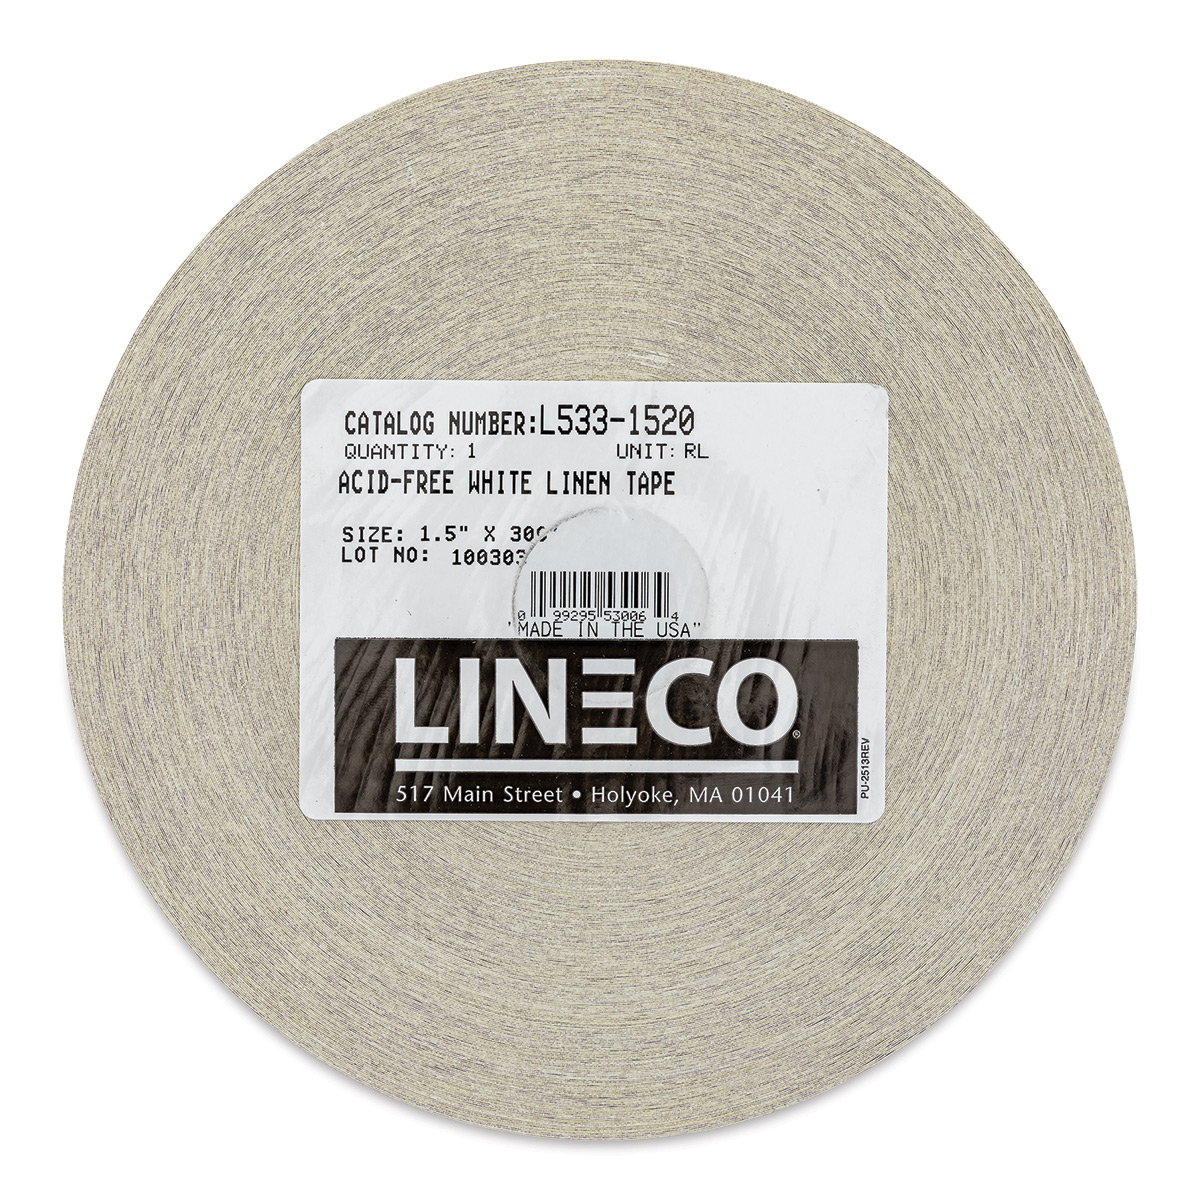 Lineco Gummed Linen Hinging Tape 1.5 x 300' L533-1520